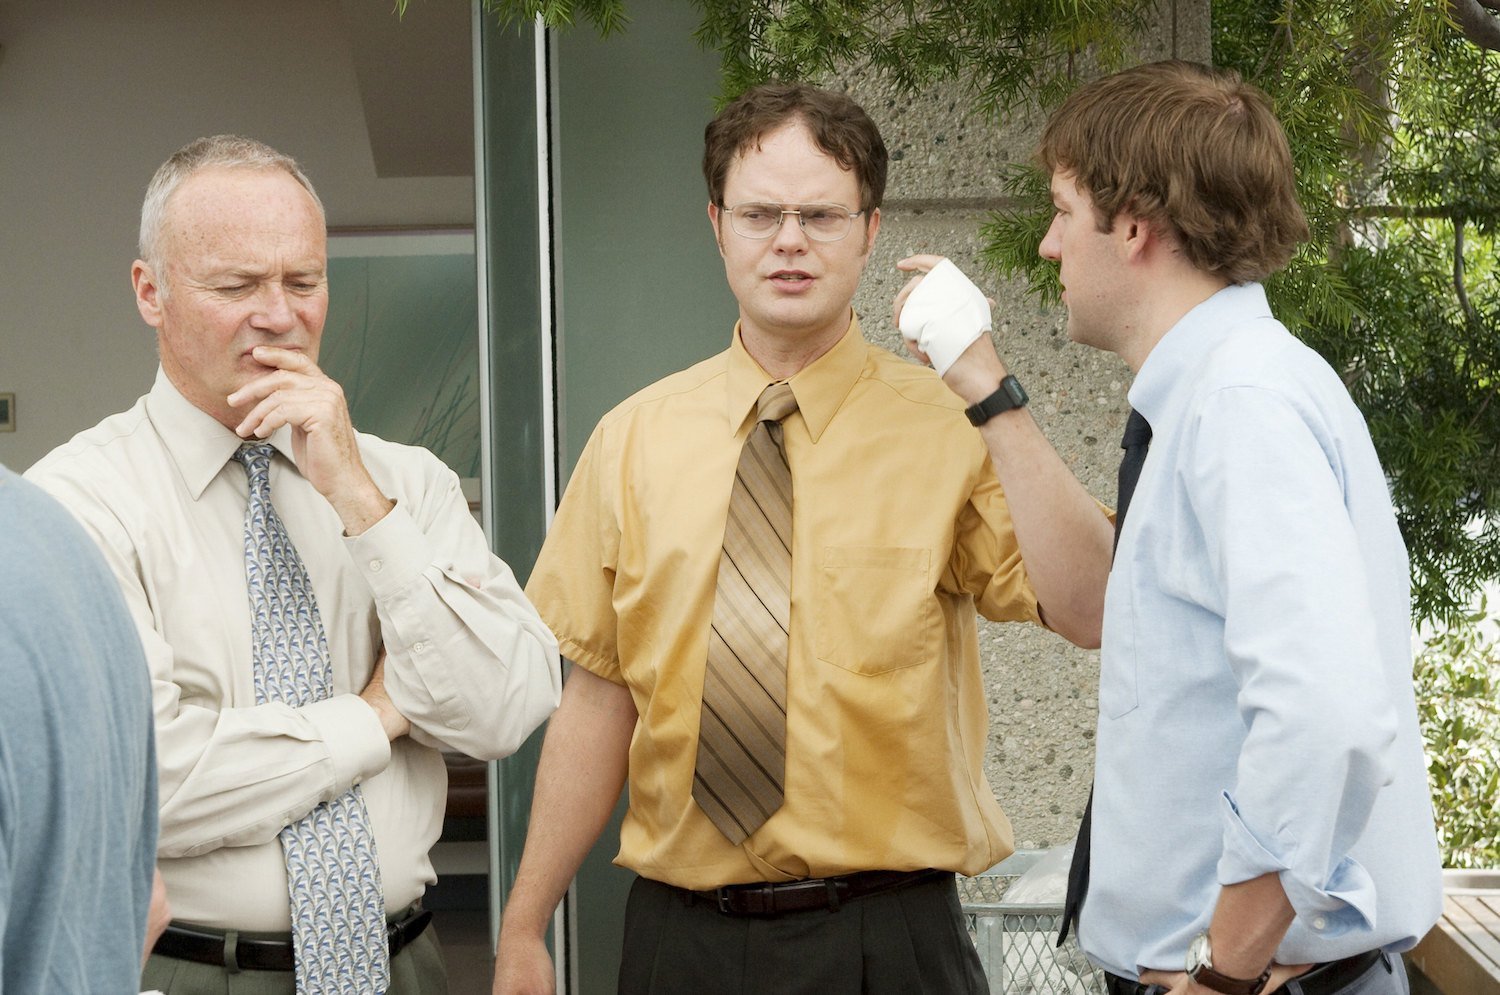 Creed Bratton as Creed, Rainn Wilson as Dwight, and John Krasinski as Jim on 'The Office' 